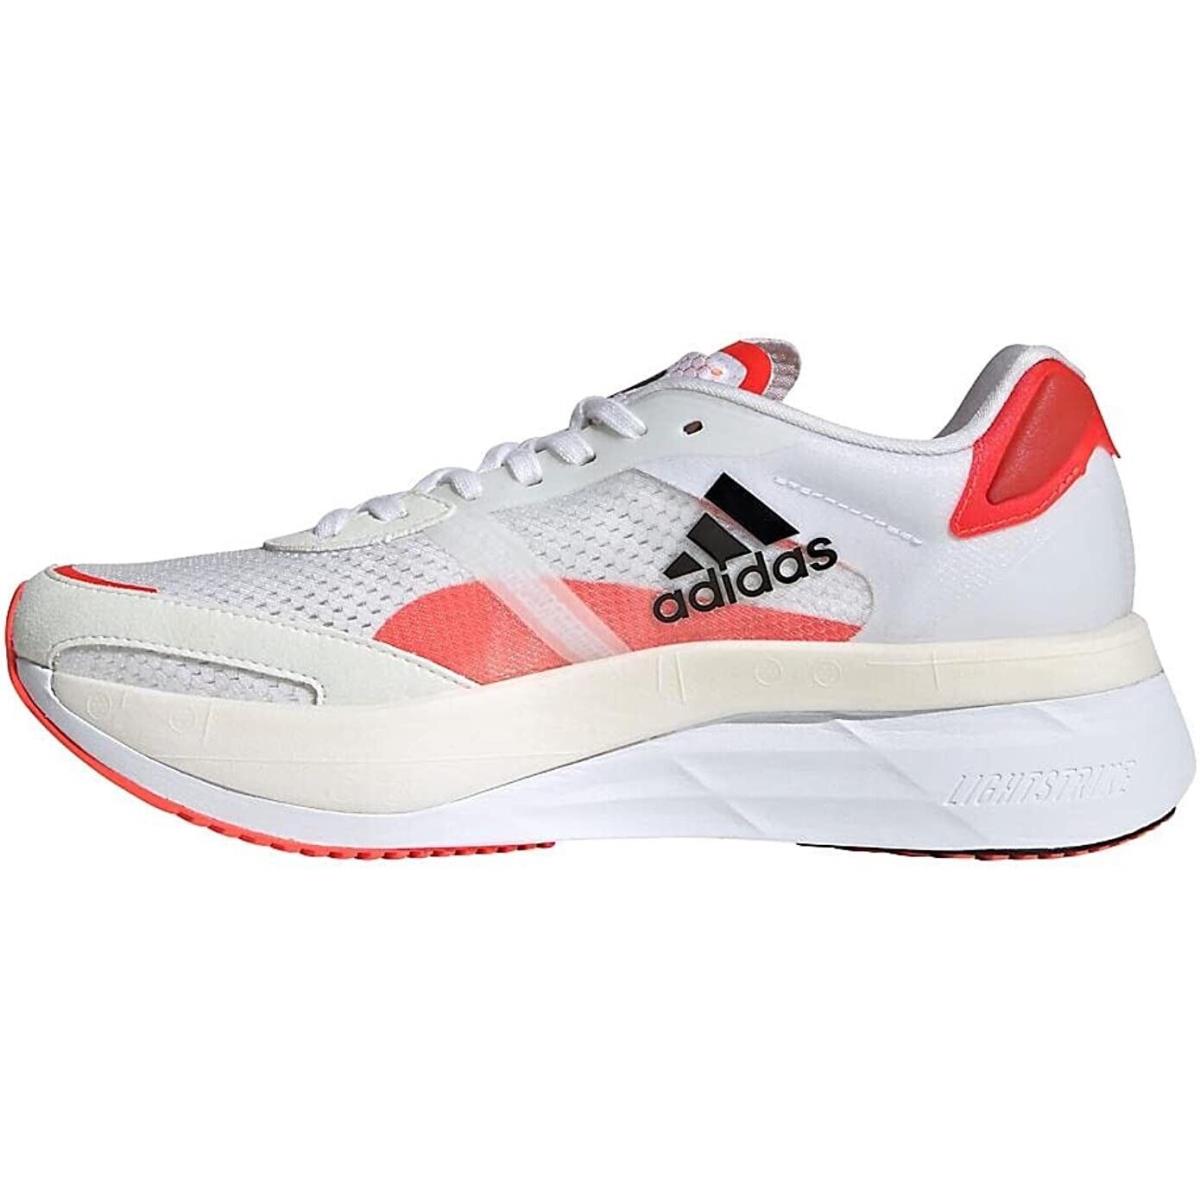 Adidas Women`s Adizero Boston 10 Running Shoes FY4080 Size 11 US - White/Solar Red